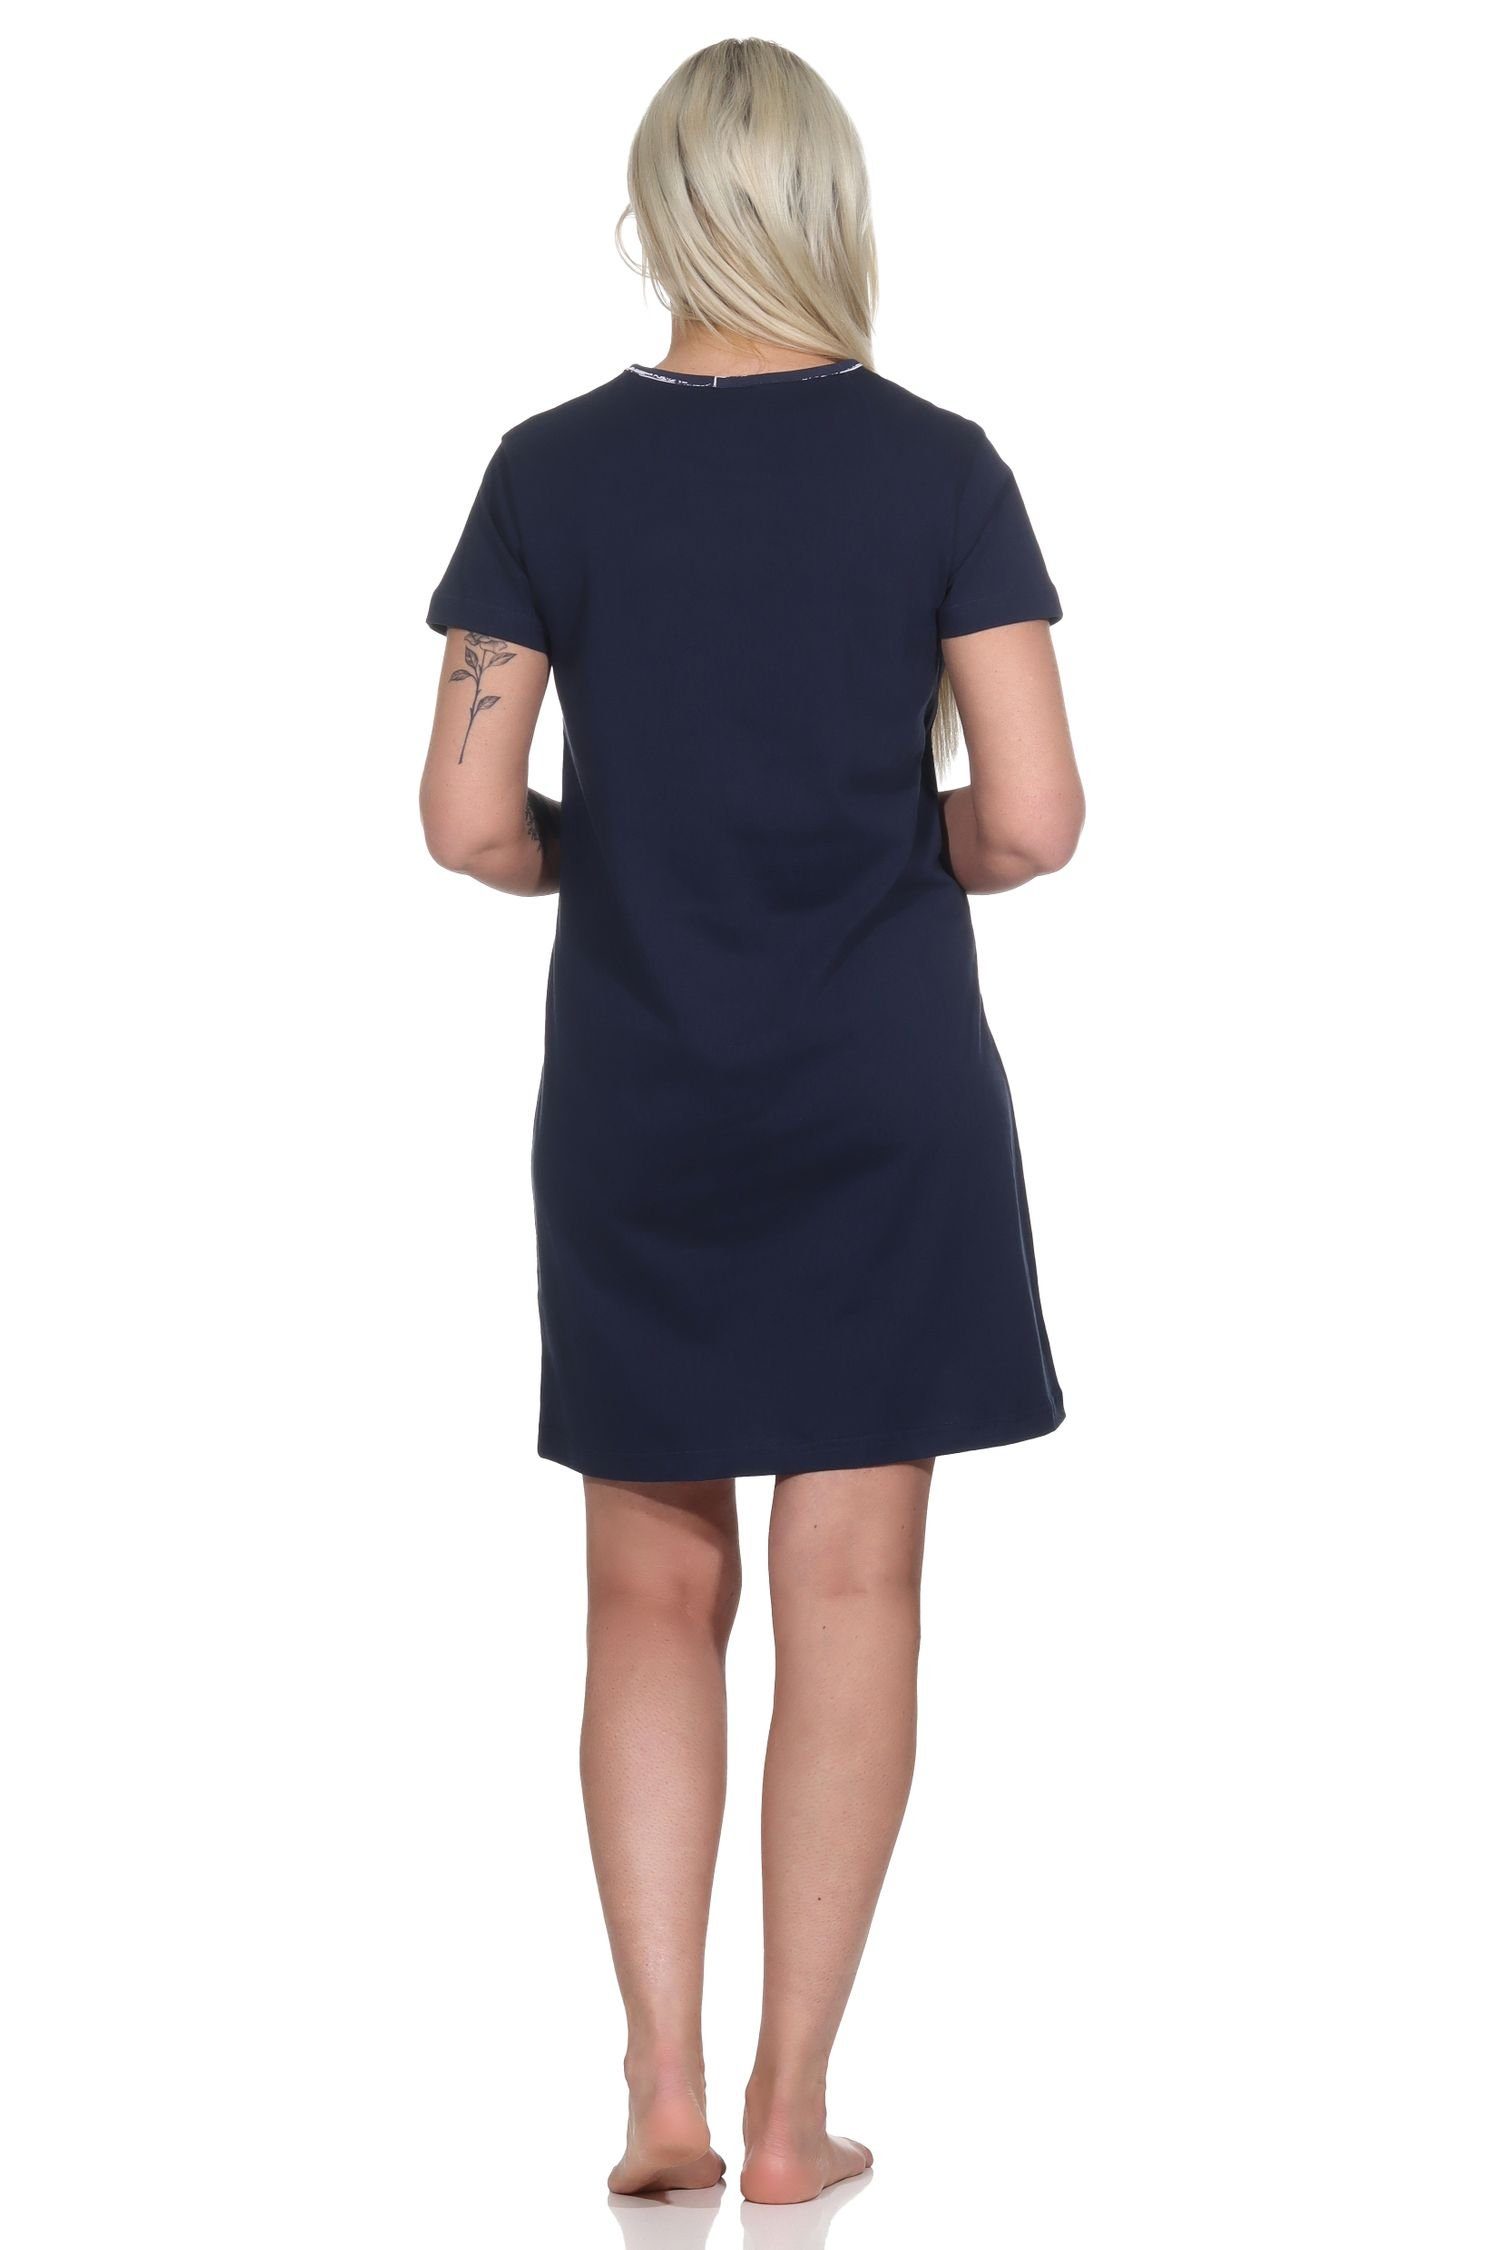 Motiv mit Nachthemd Leuchtturm Normann kurzarm Maritimes marine Damen Nachthemd